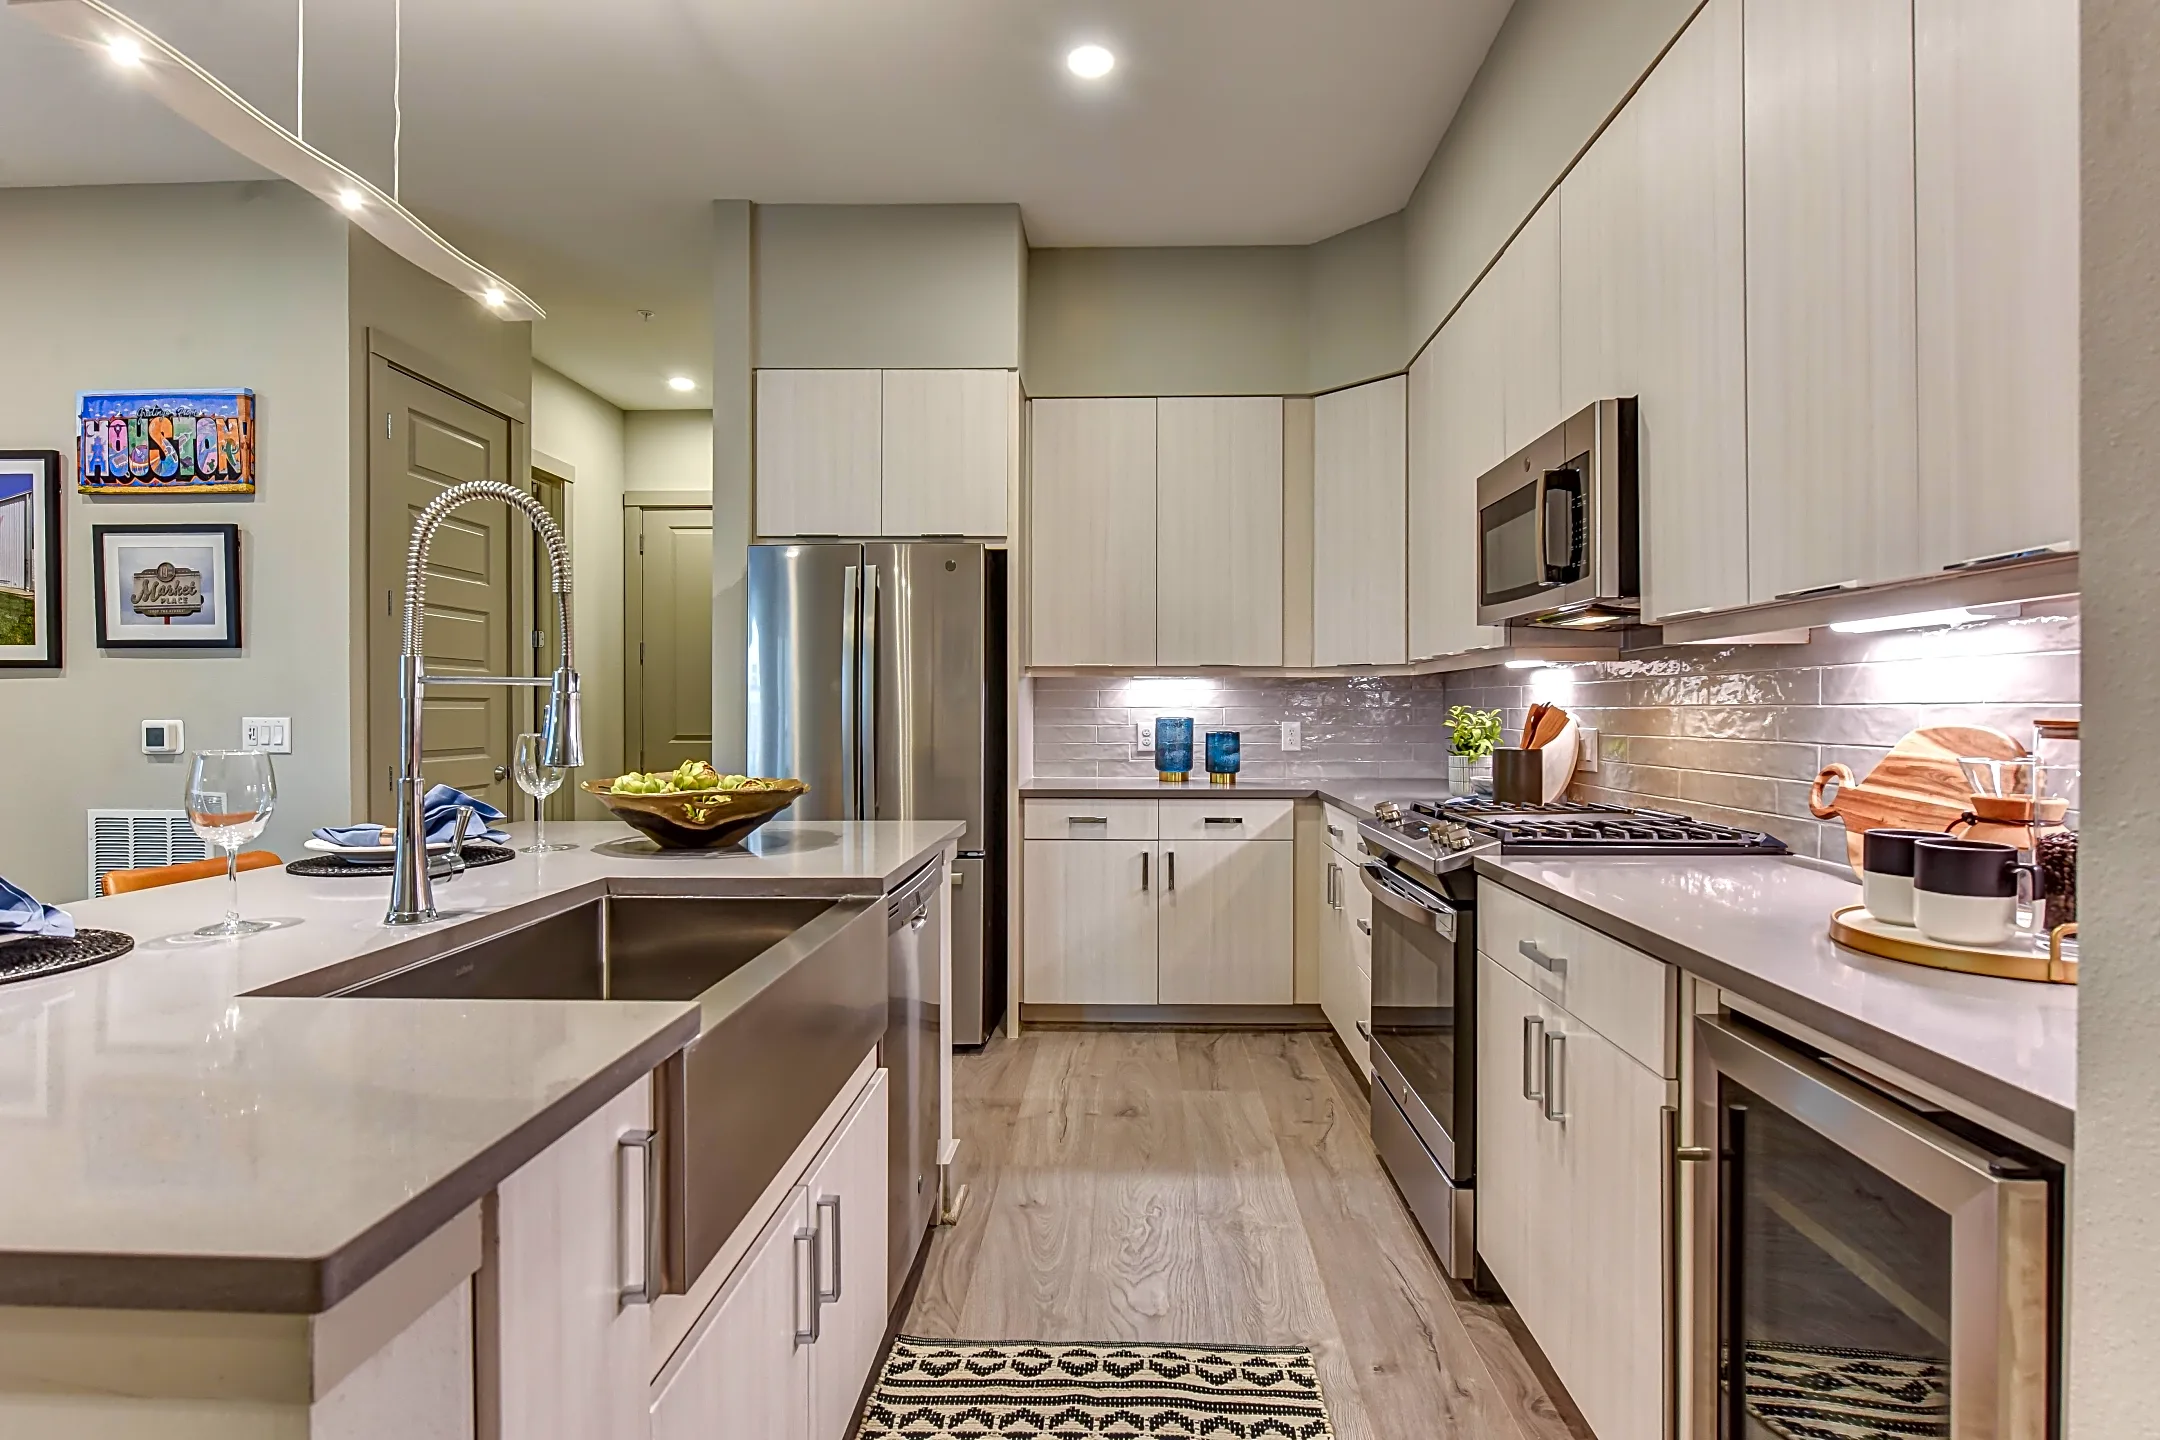 Kitchen - Domain Heights Apartments - Houston, TX